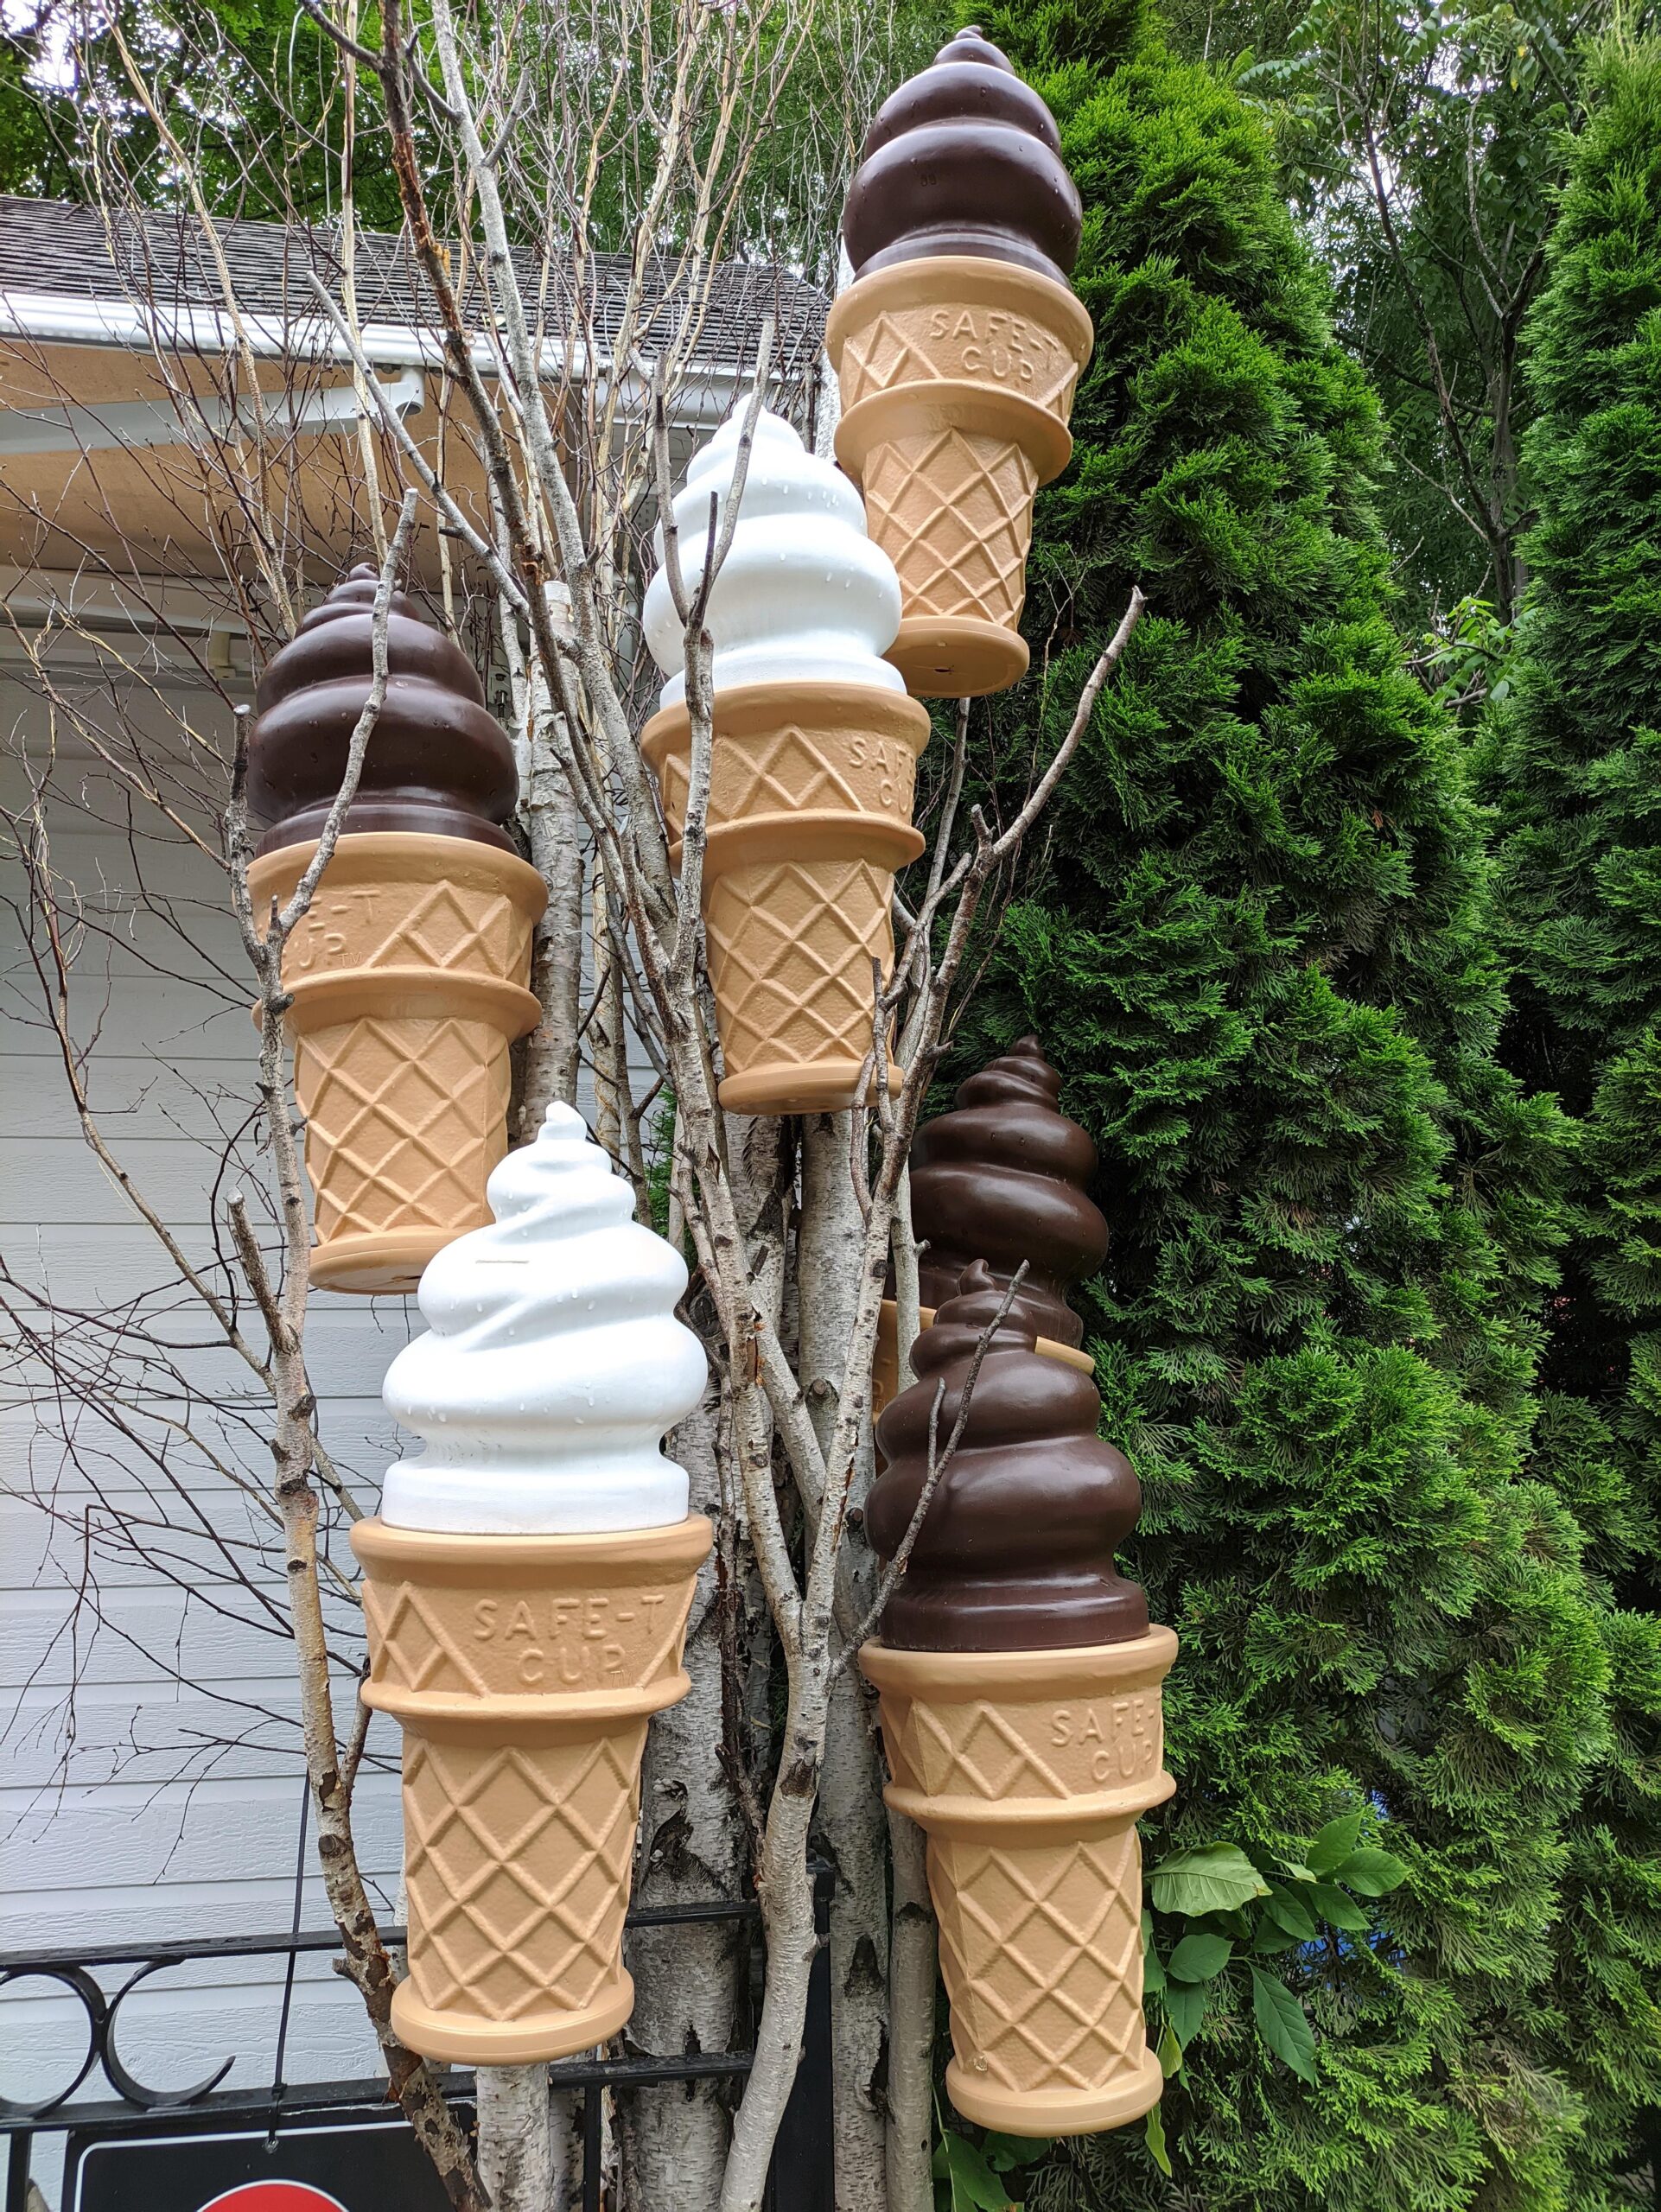 The rare ice cream tree